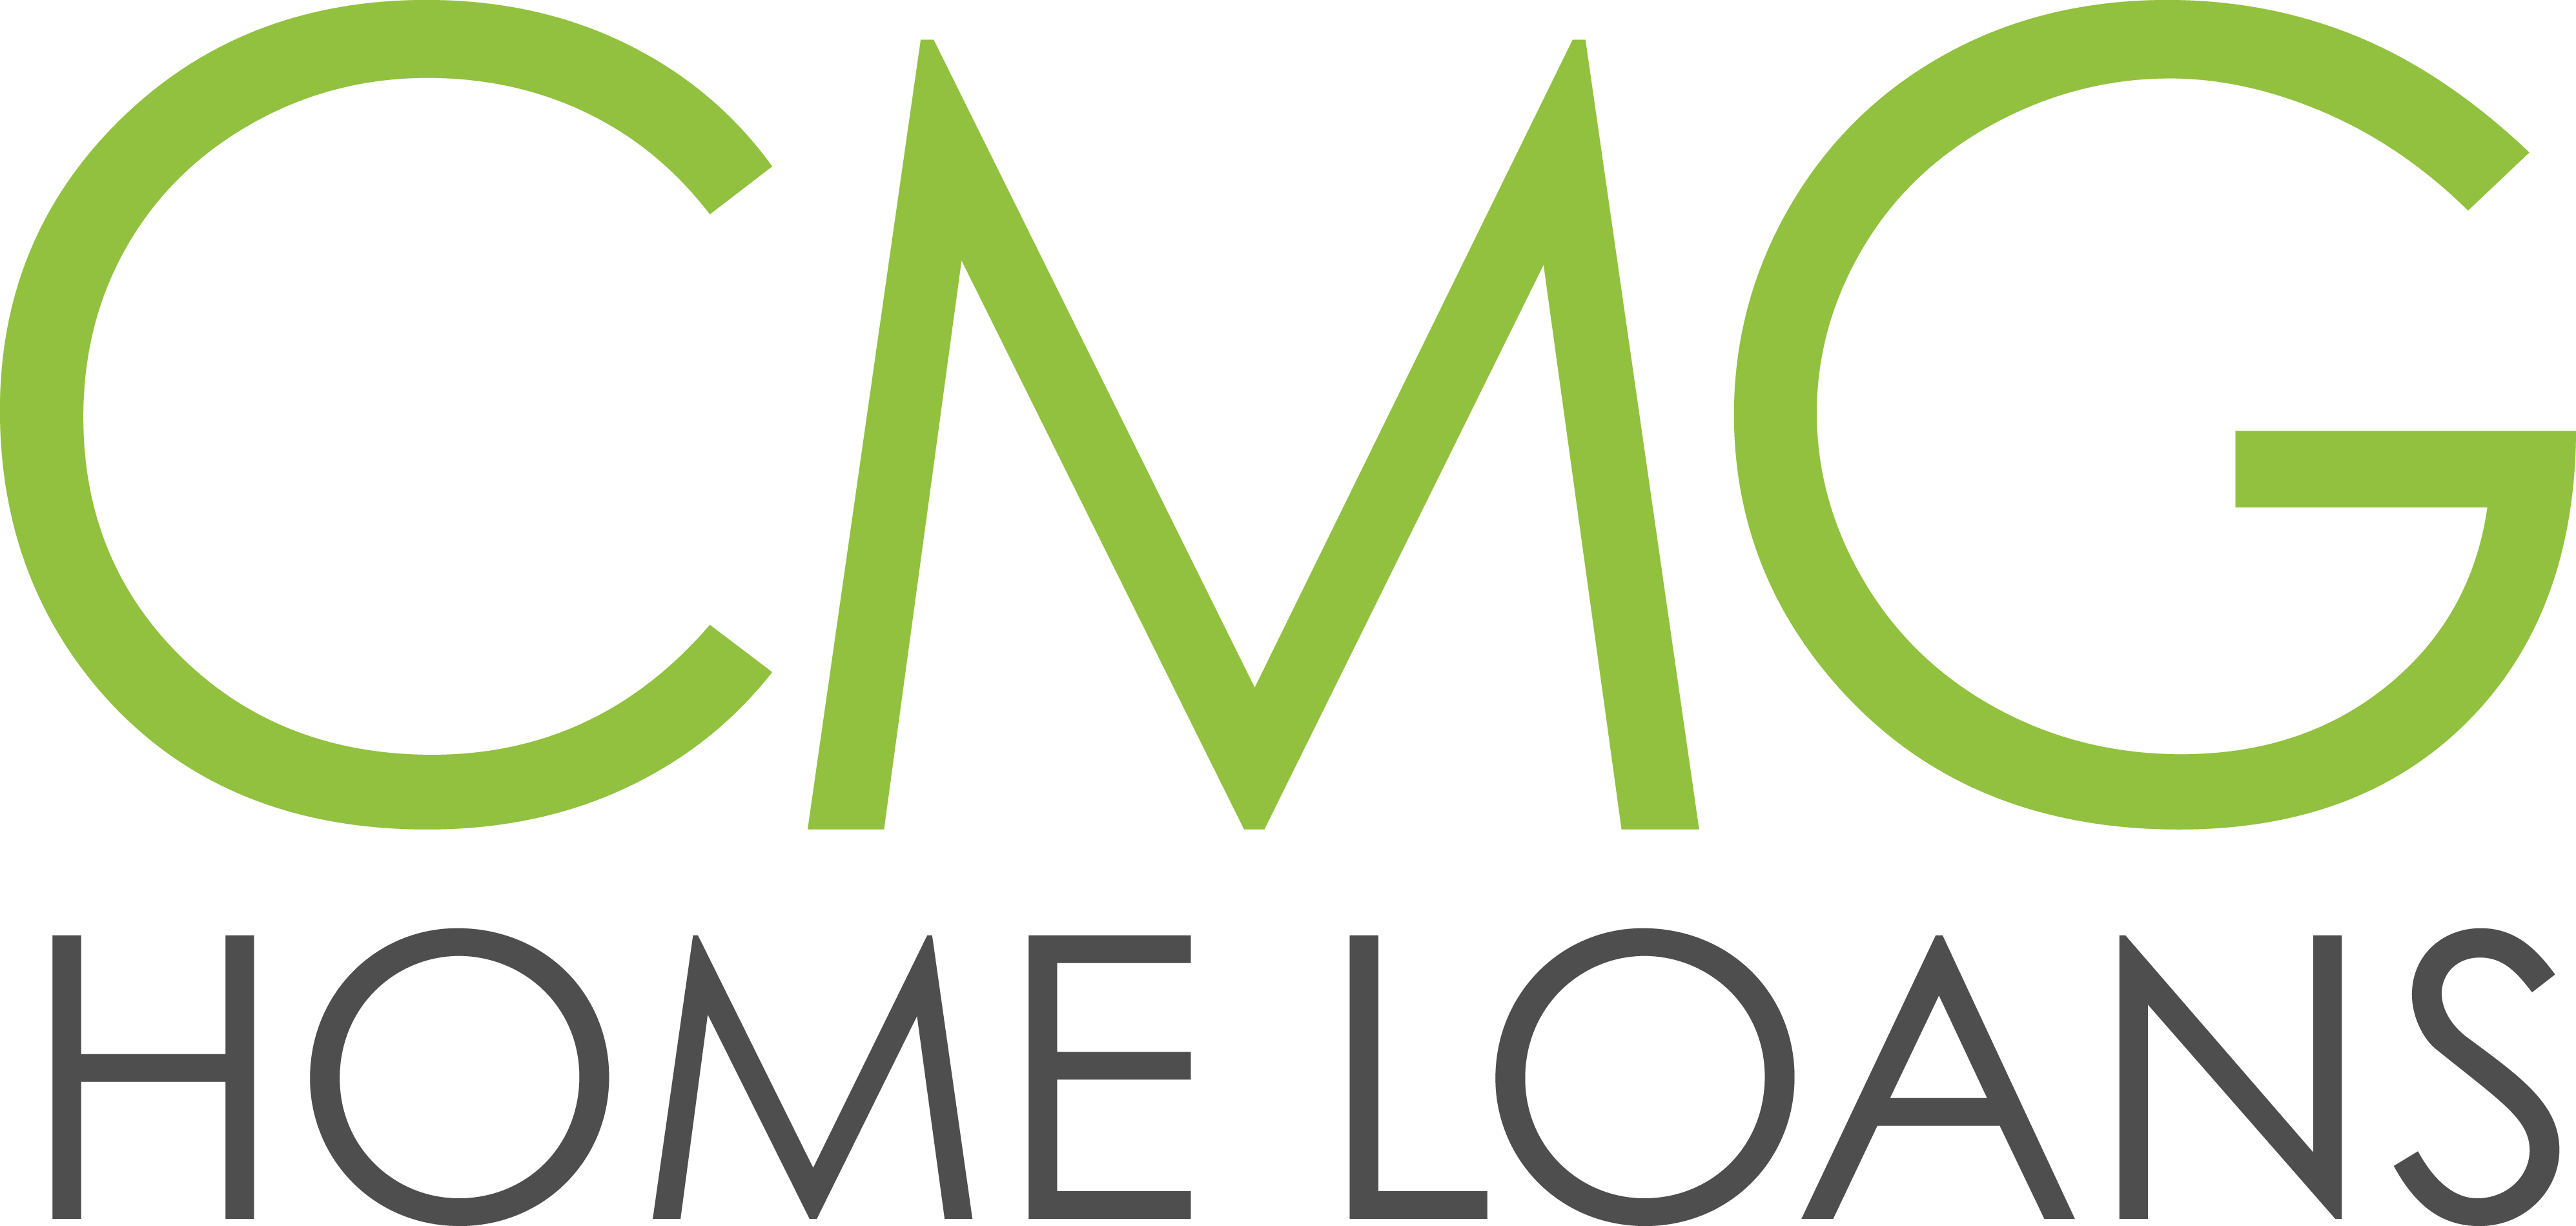 cmg.logo.stacked